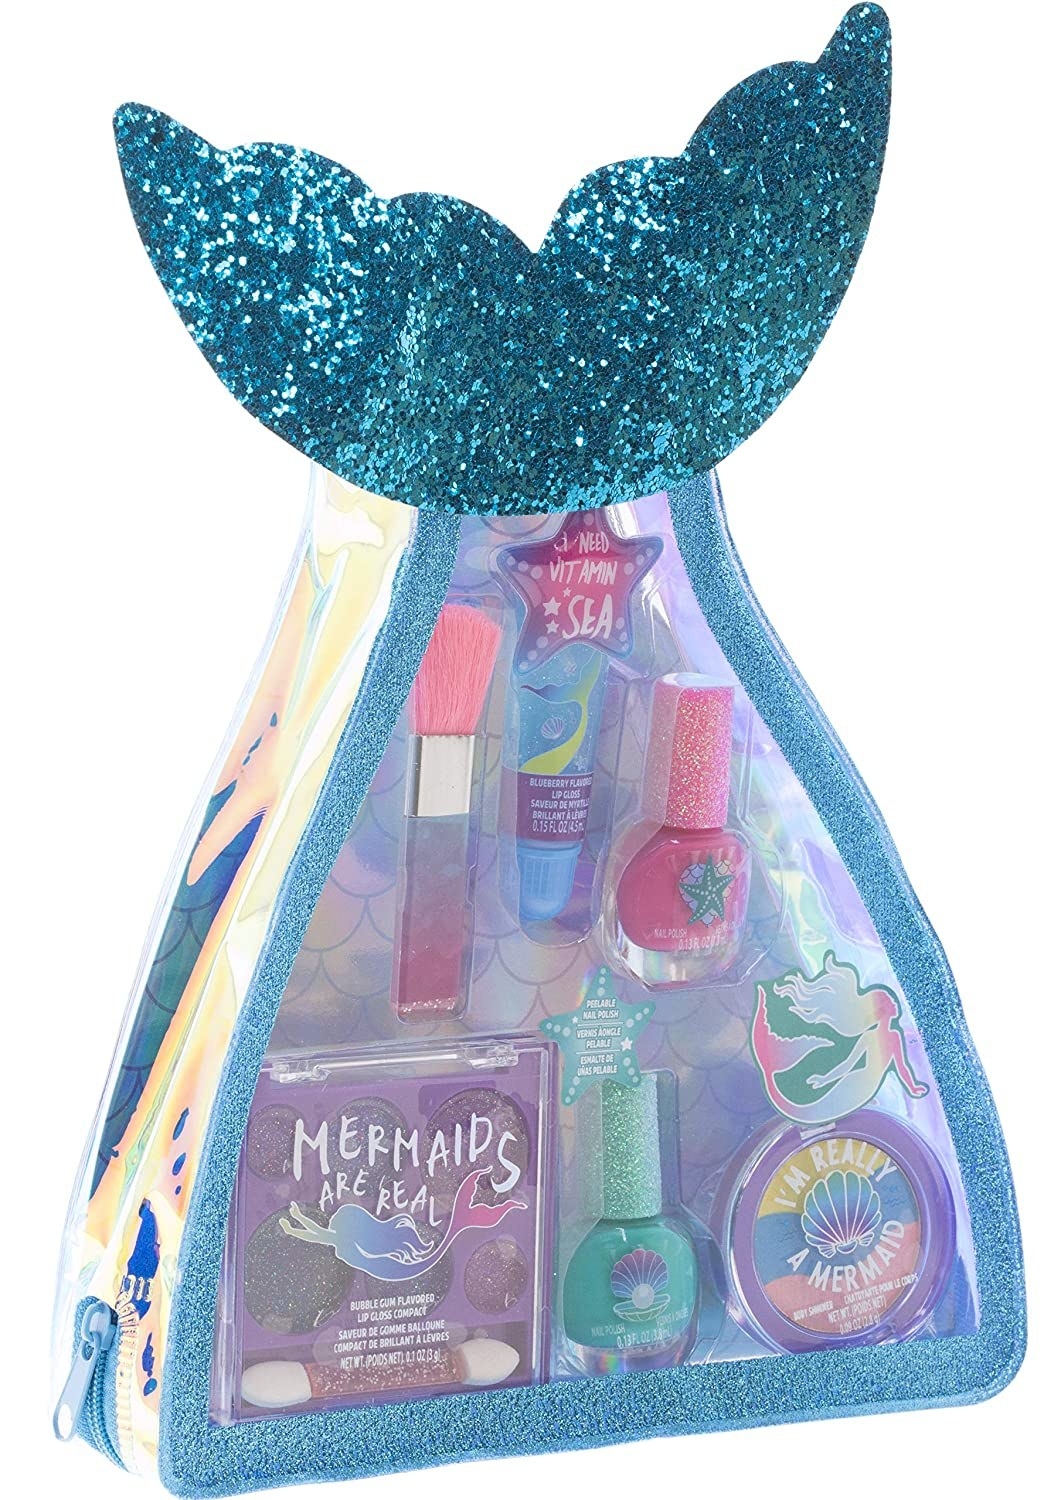 A blue shimmery mermaid shaped makeup set